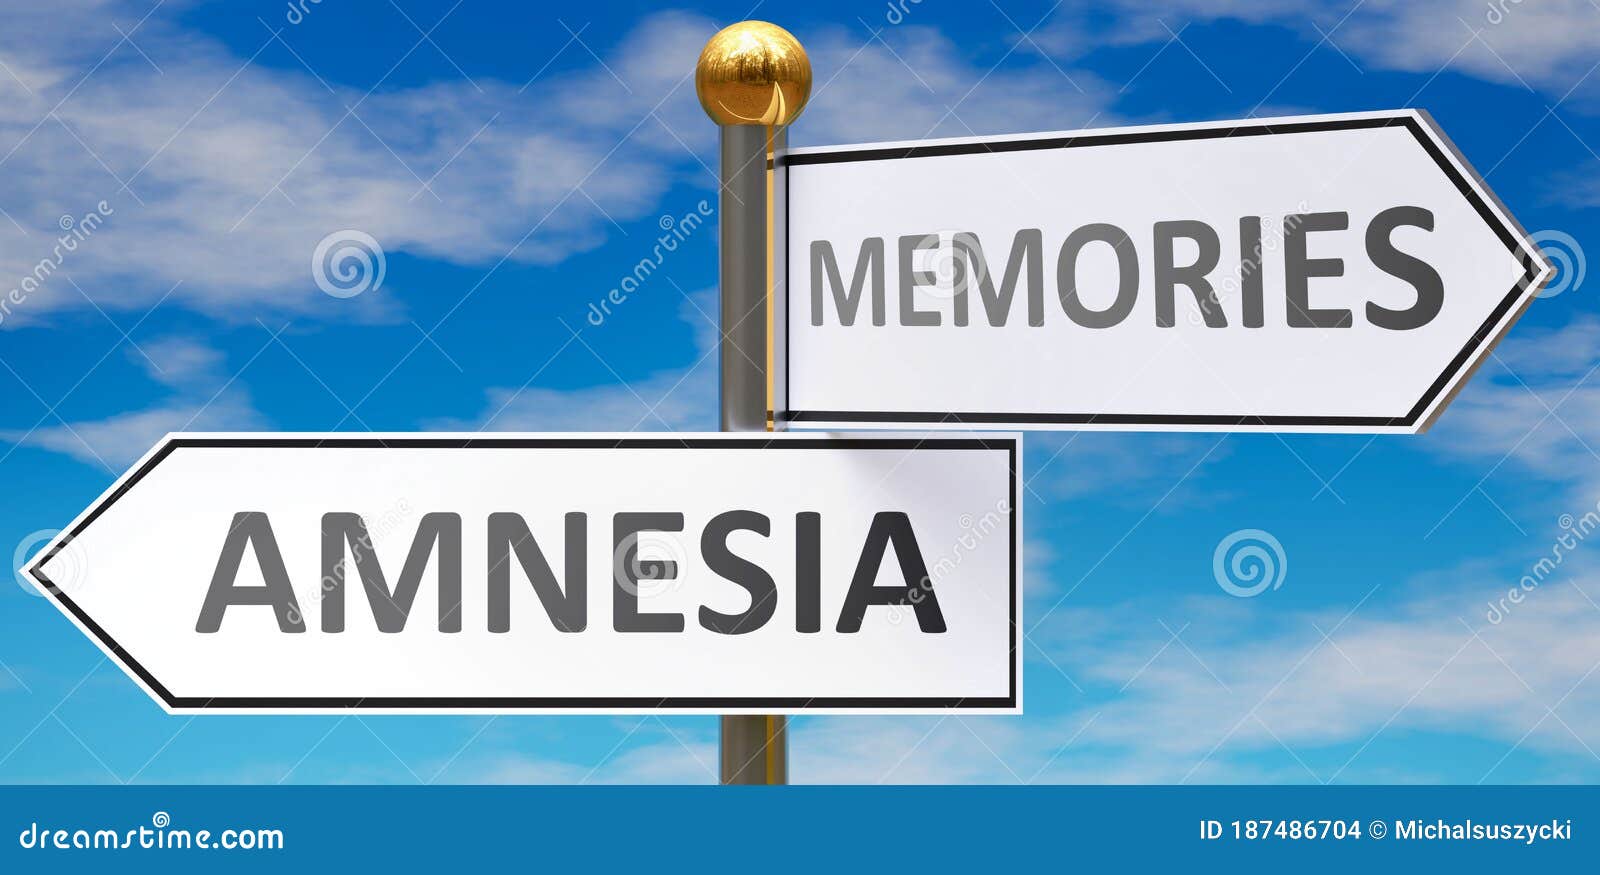 Amnesia the opposite of Memory